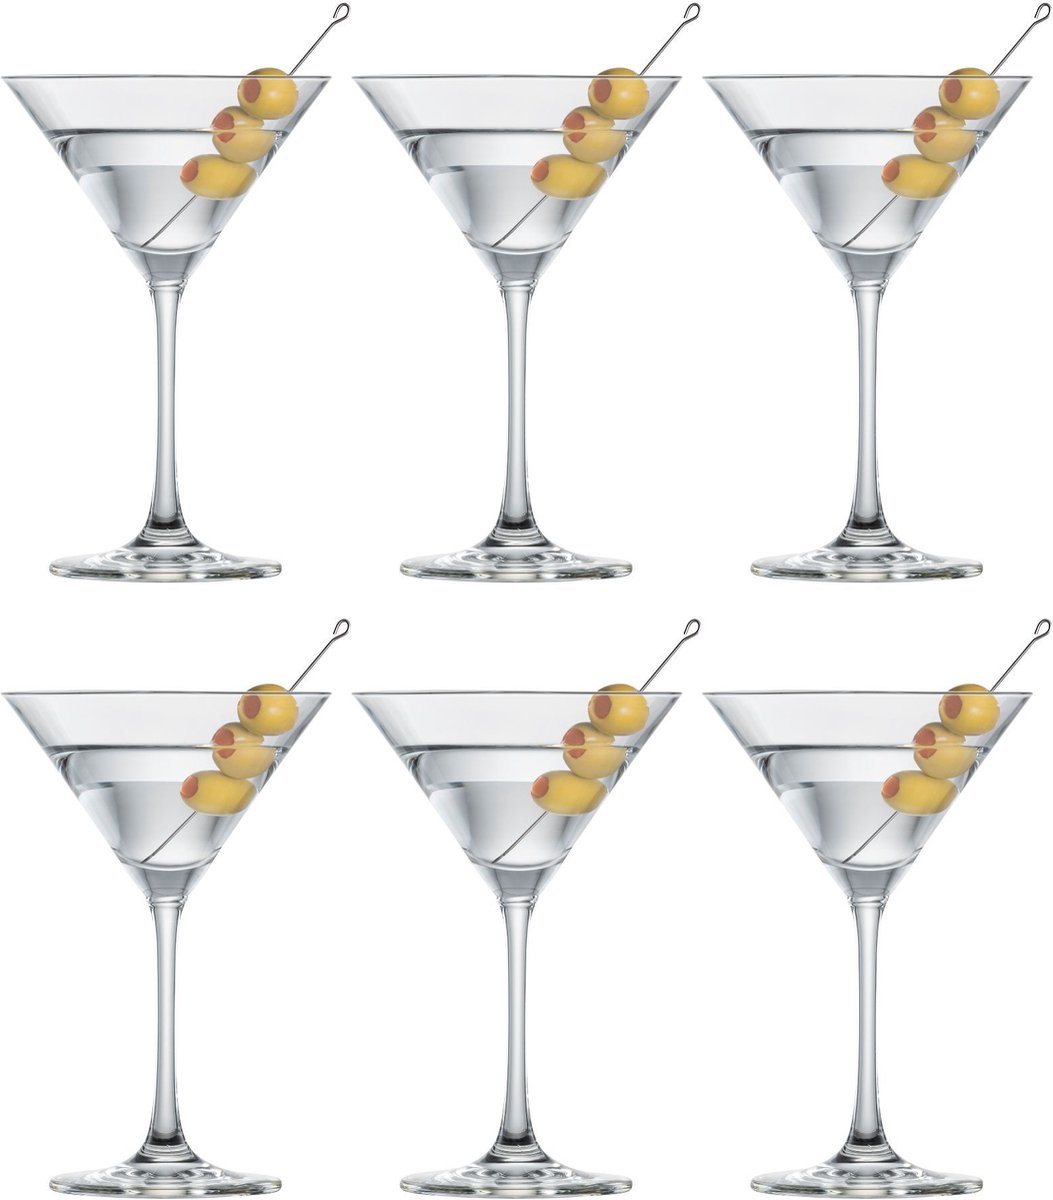 Schott Zwiesel Bar Special Martiniglas - 0,17 l - 6 Stuks